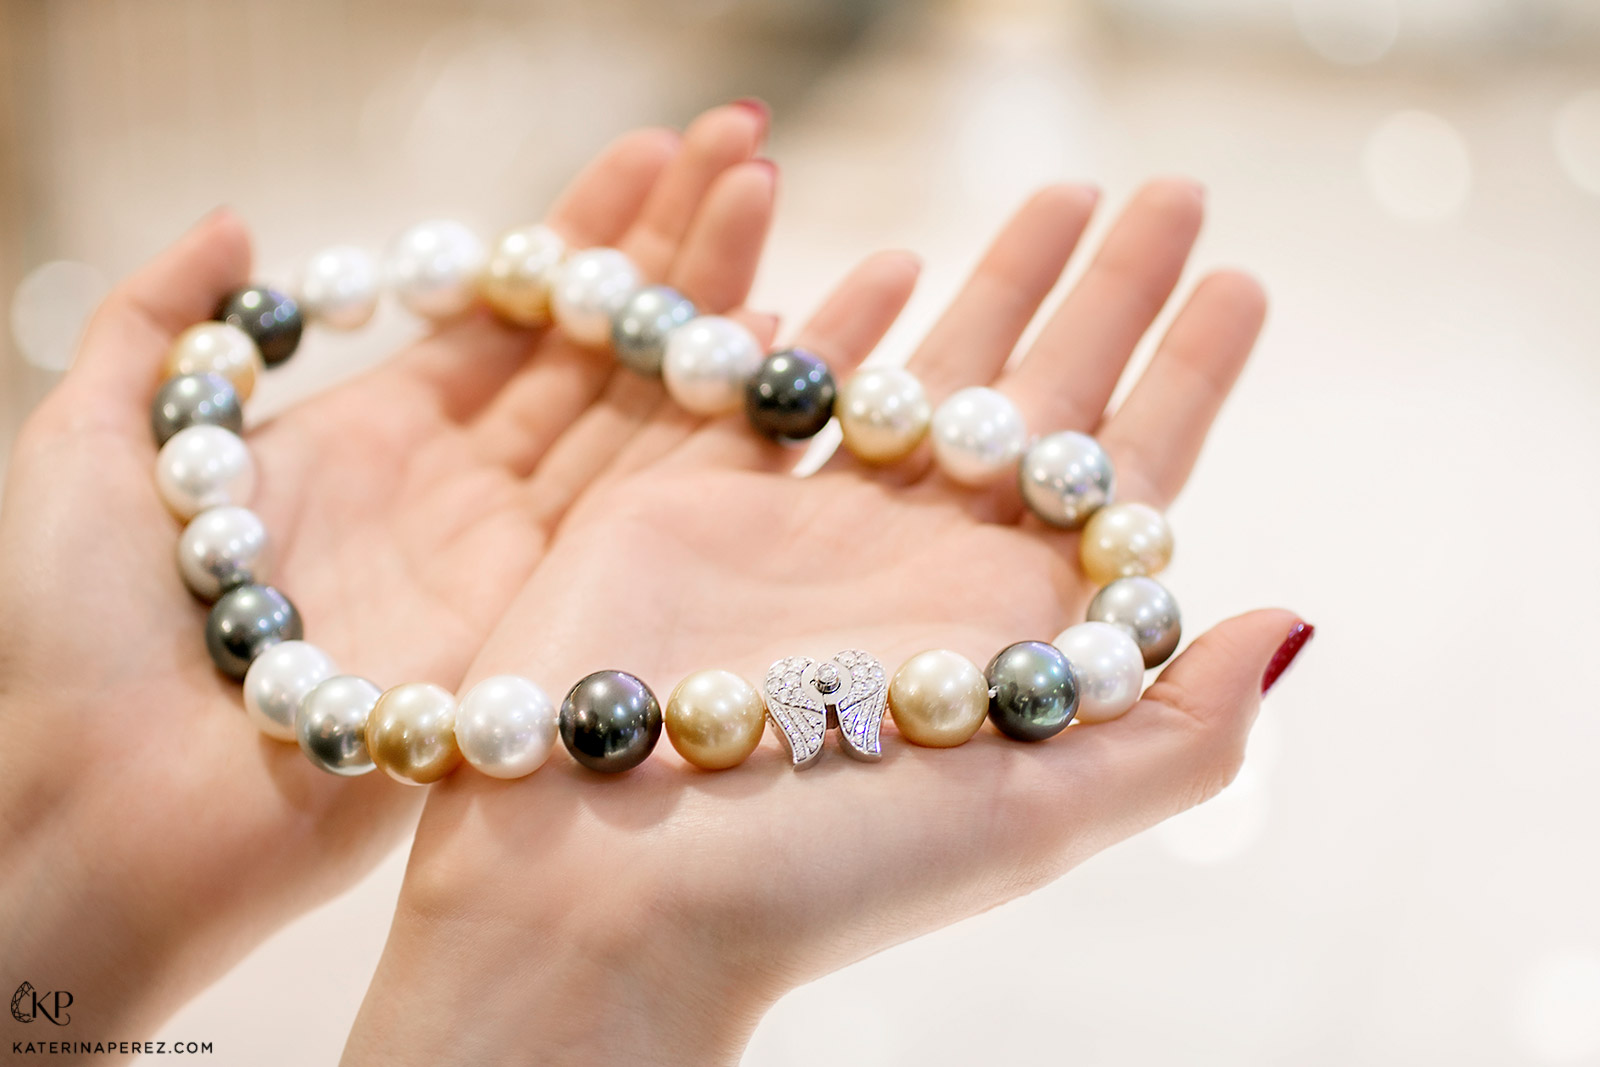 Ksenia Podnebesnaya necklace with South Sea and Tahitian pearls and diamond clasp